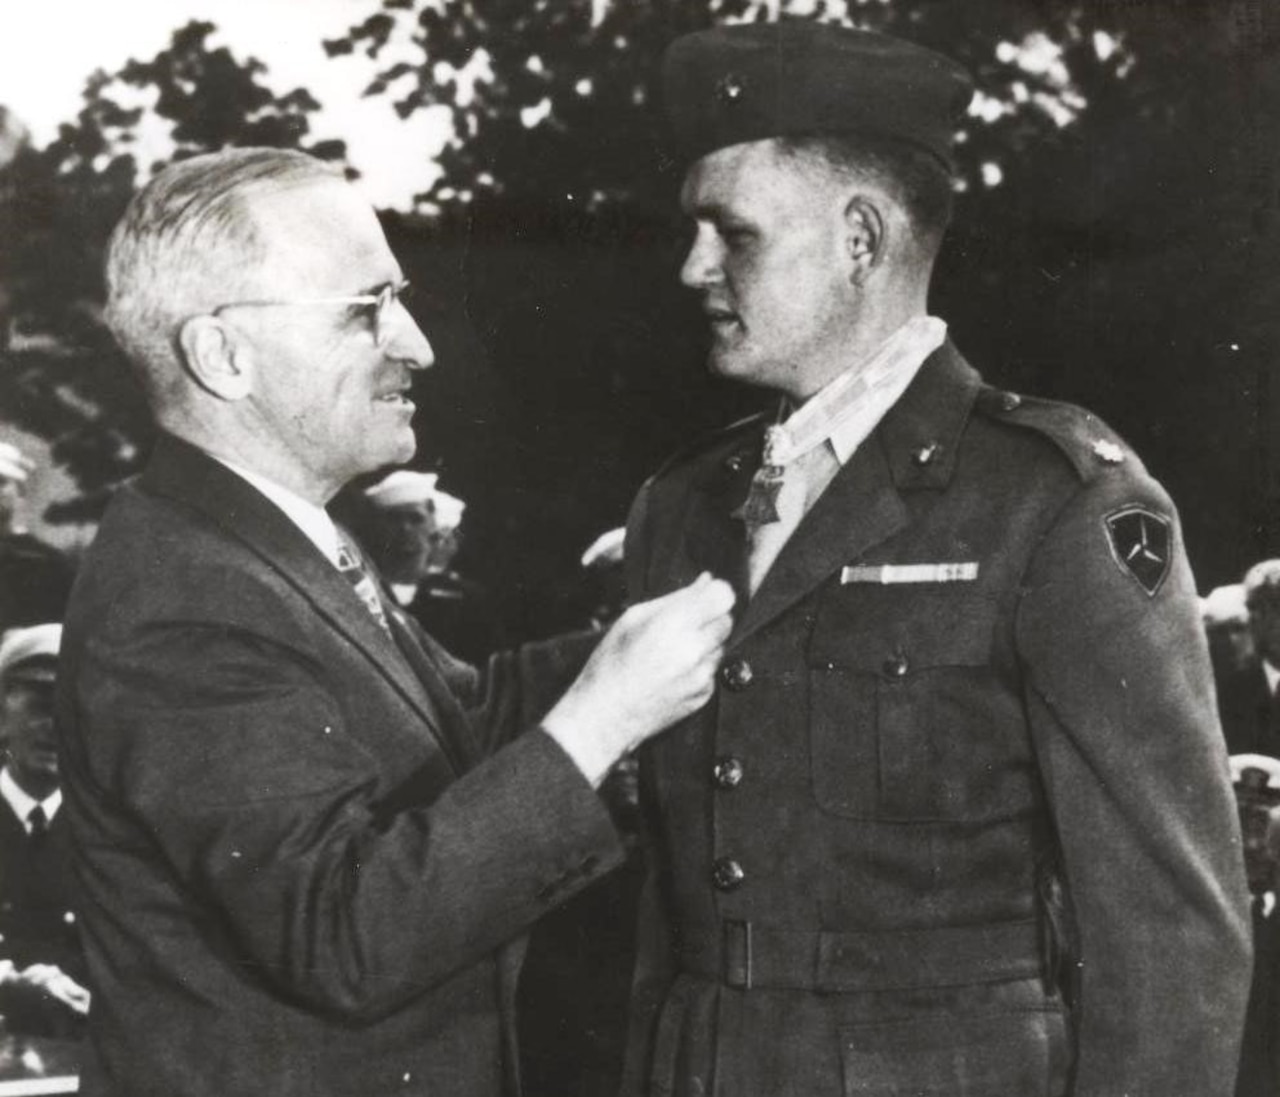 A man adjusts the lapel of another man's uniform.